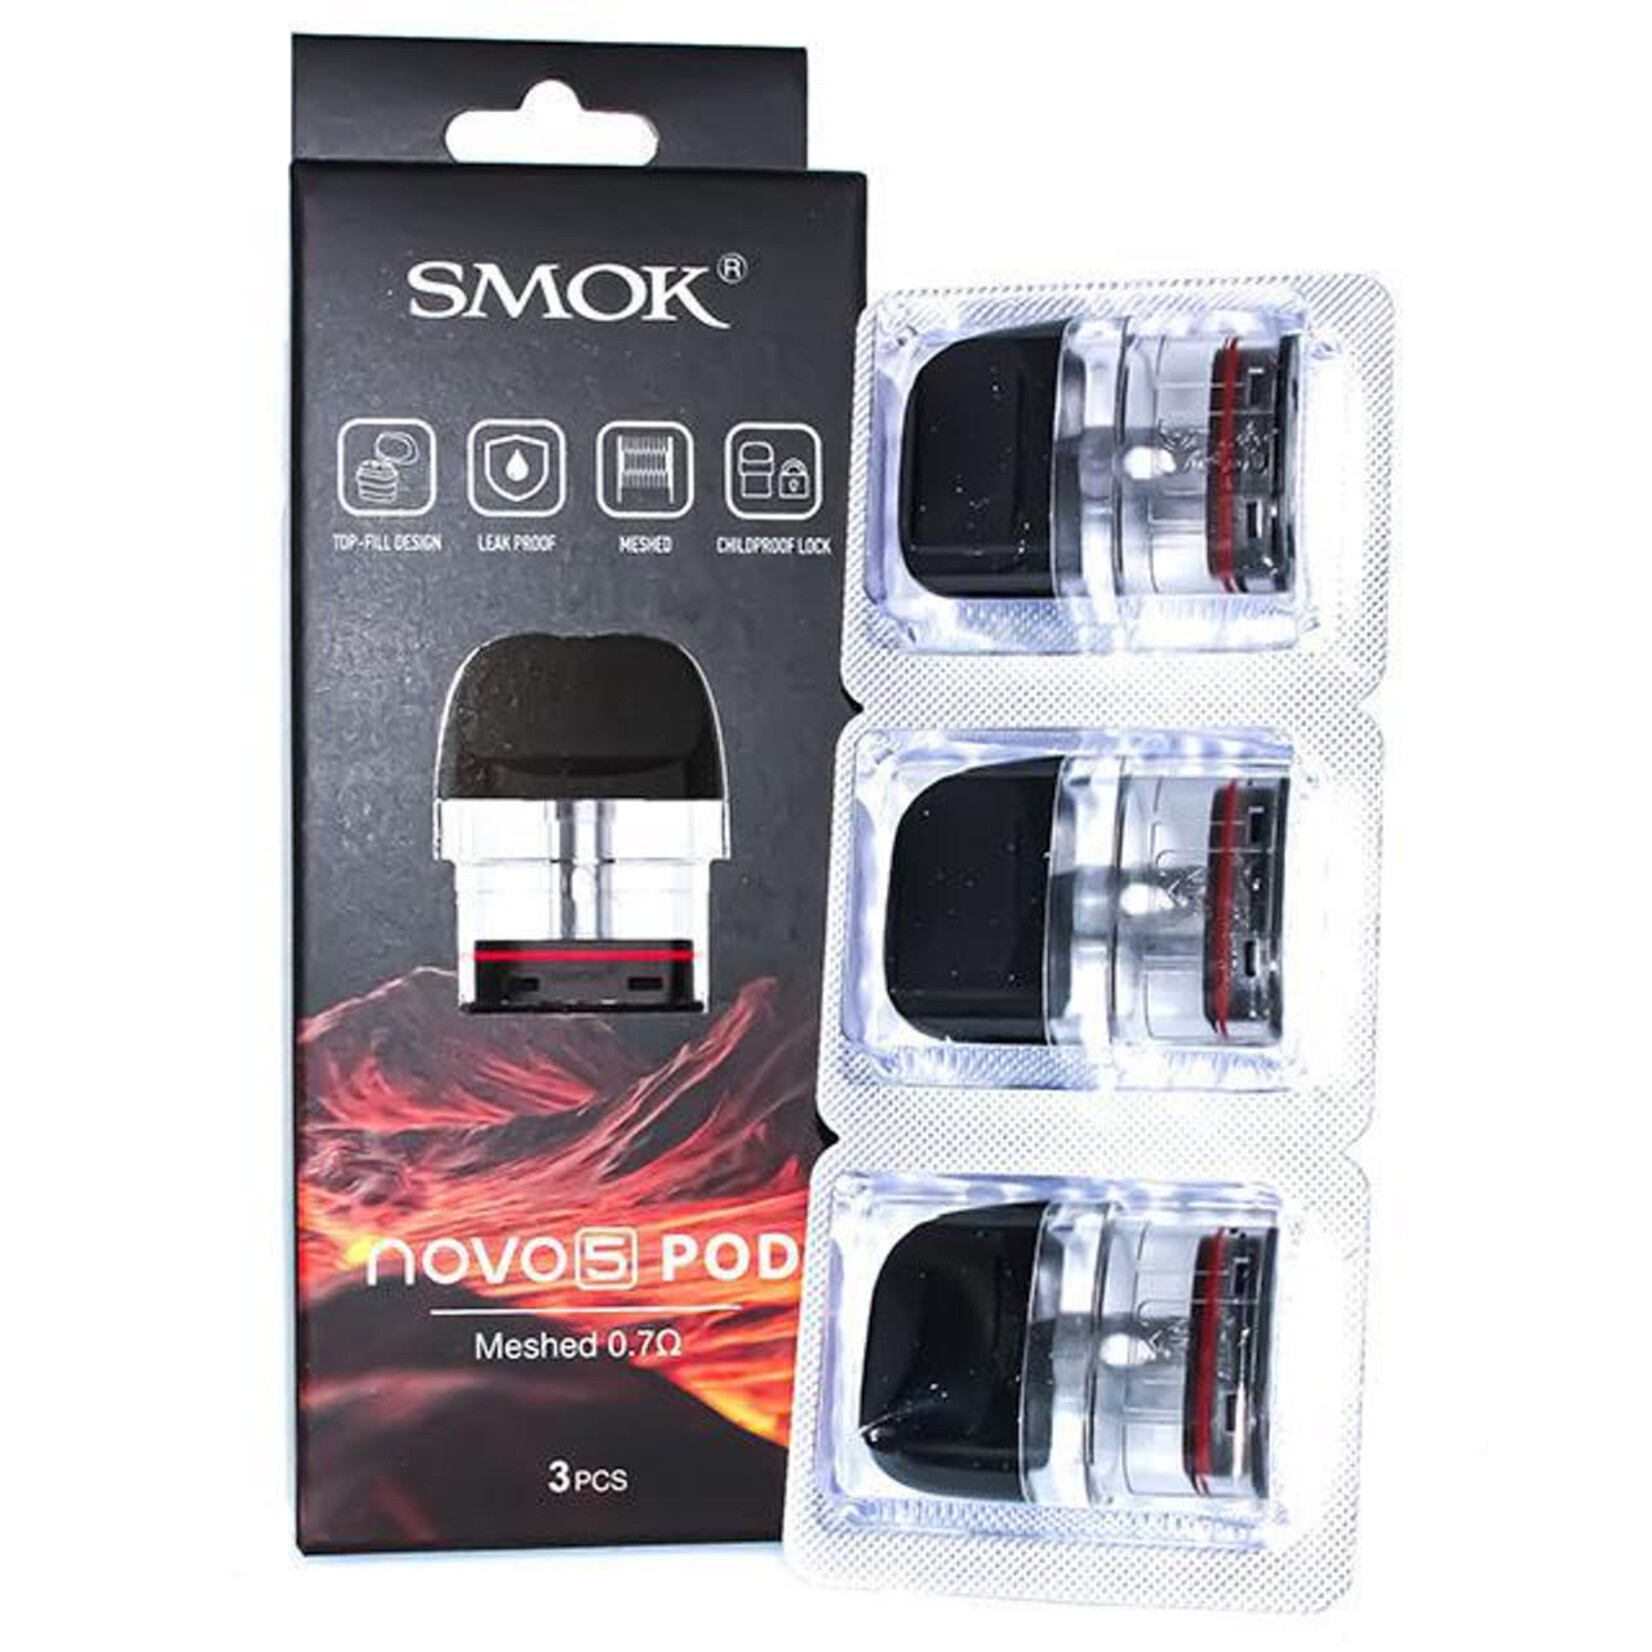 Smok Novo 5 Replacement Pods (Box of 3)